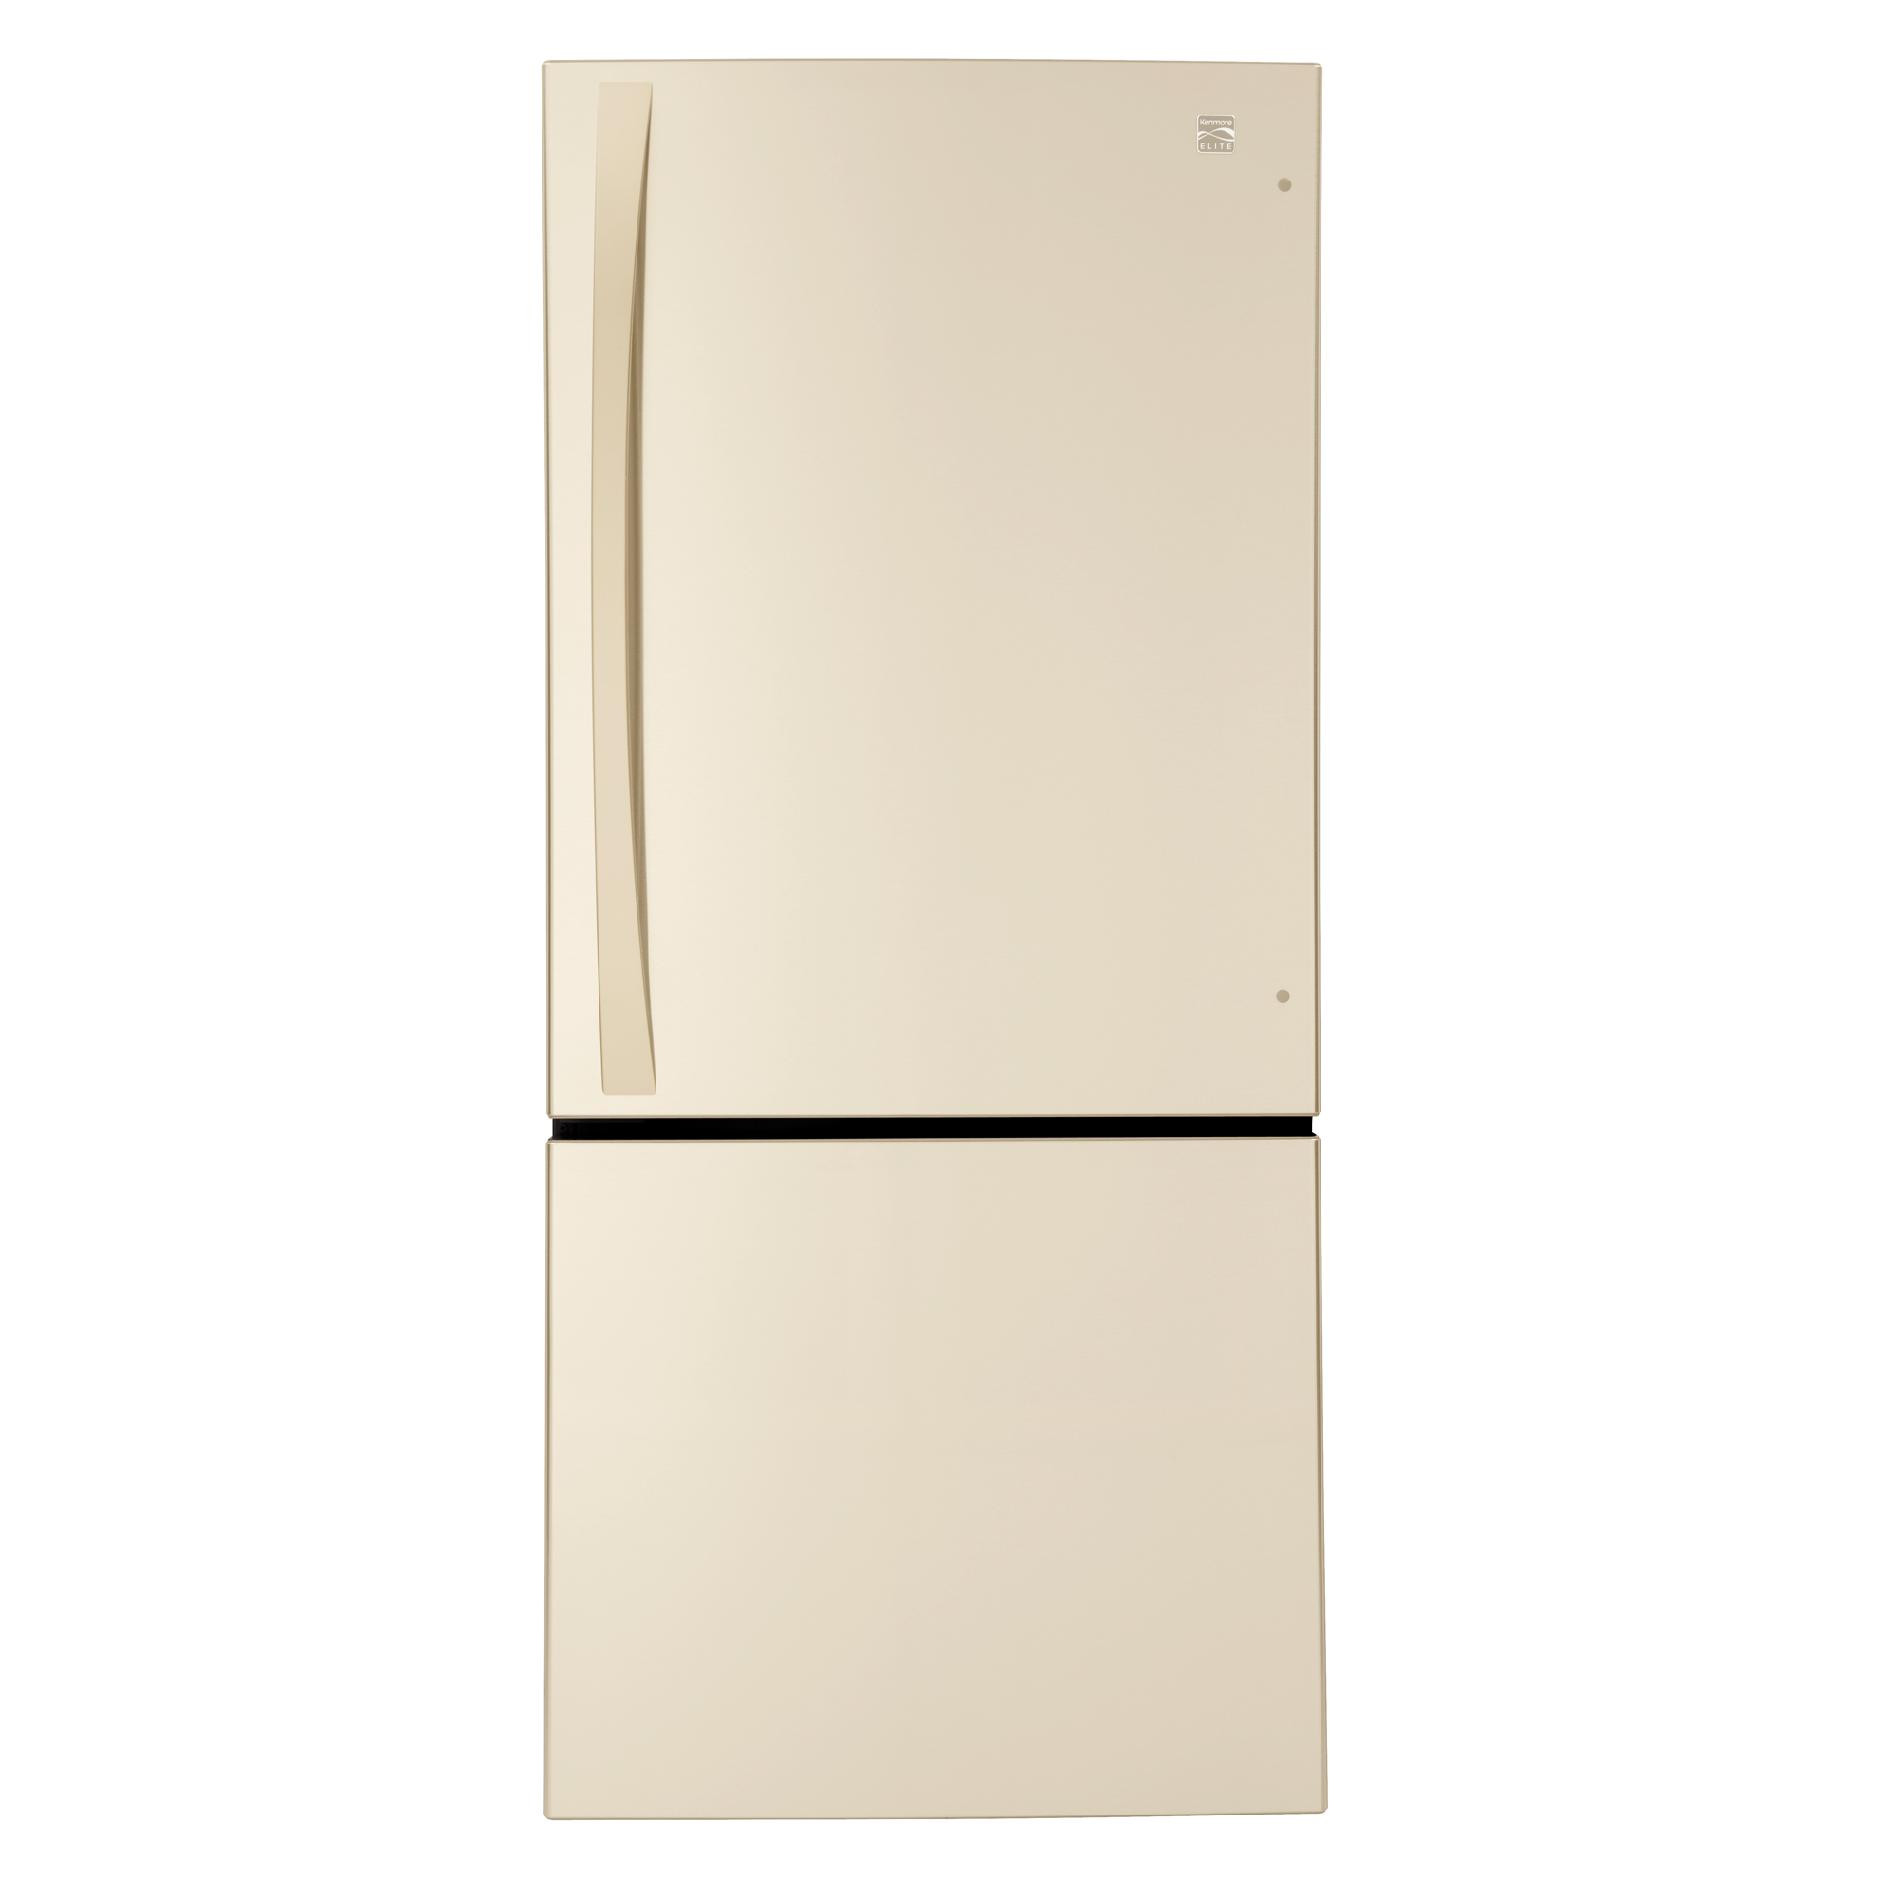 Bisque Refrigerator Bottom Freezer
 Kenmore Elite 22 1 cu ft Bottom Freezer